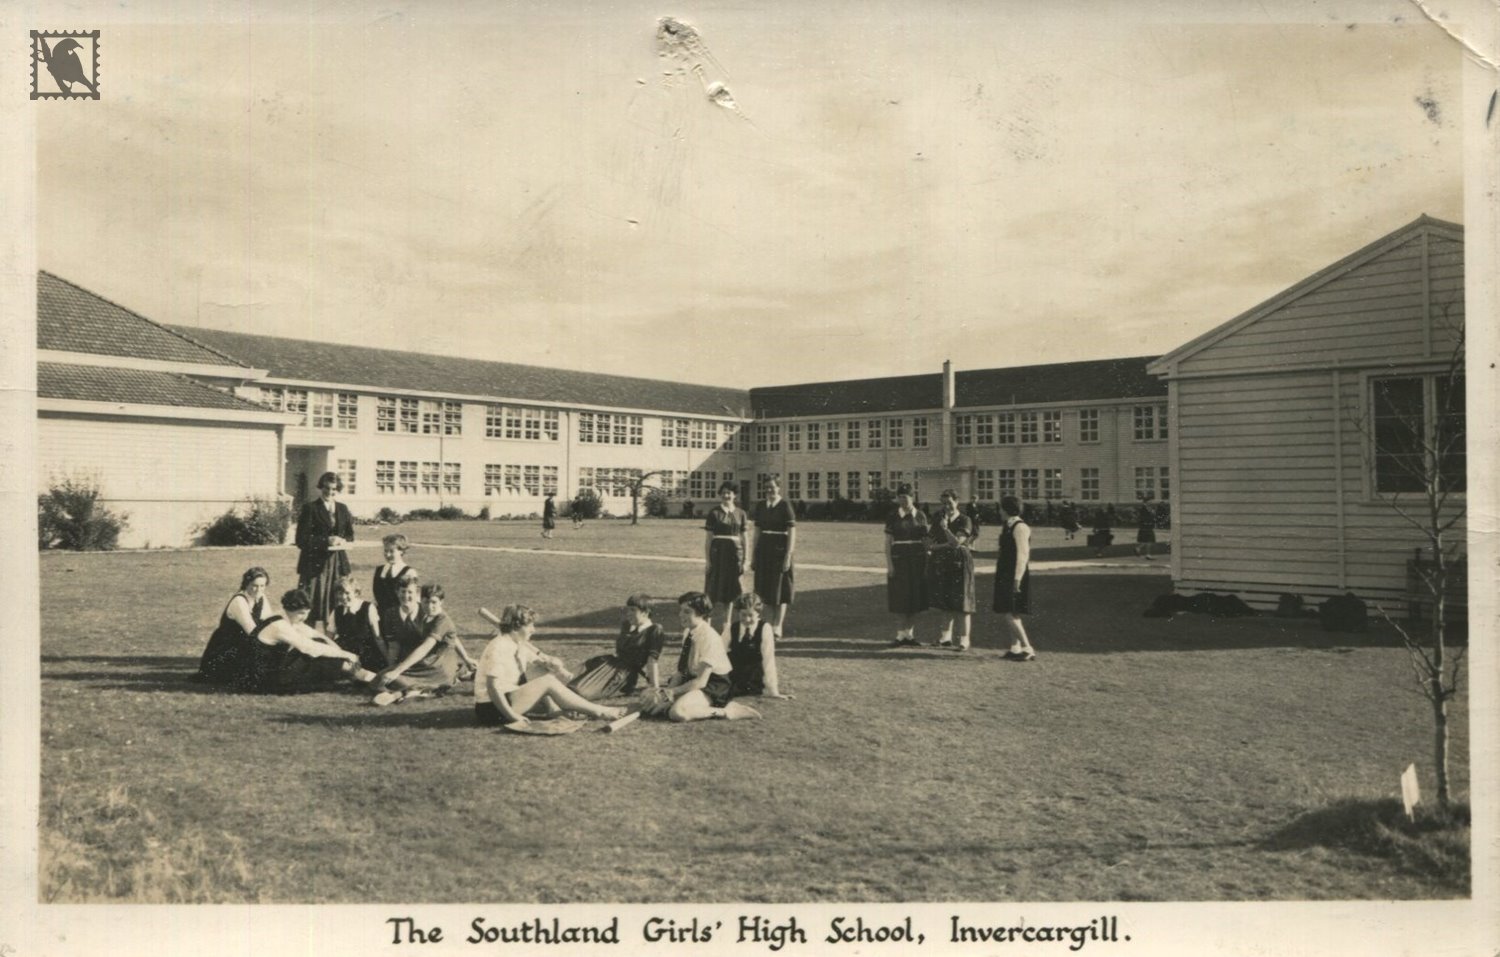 Invercargill-The Southland Girls' High School